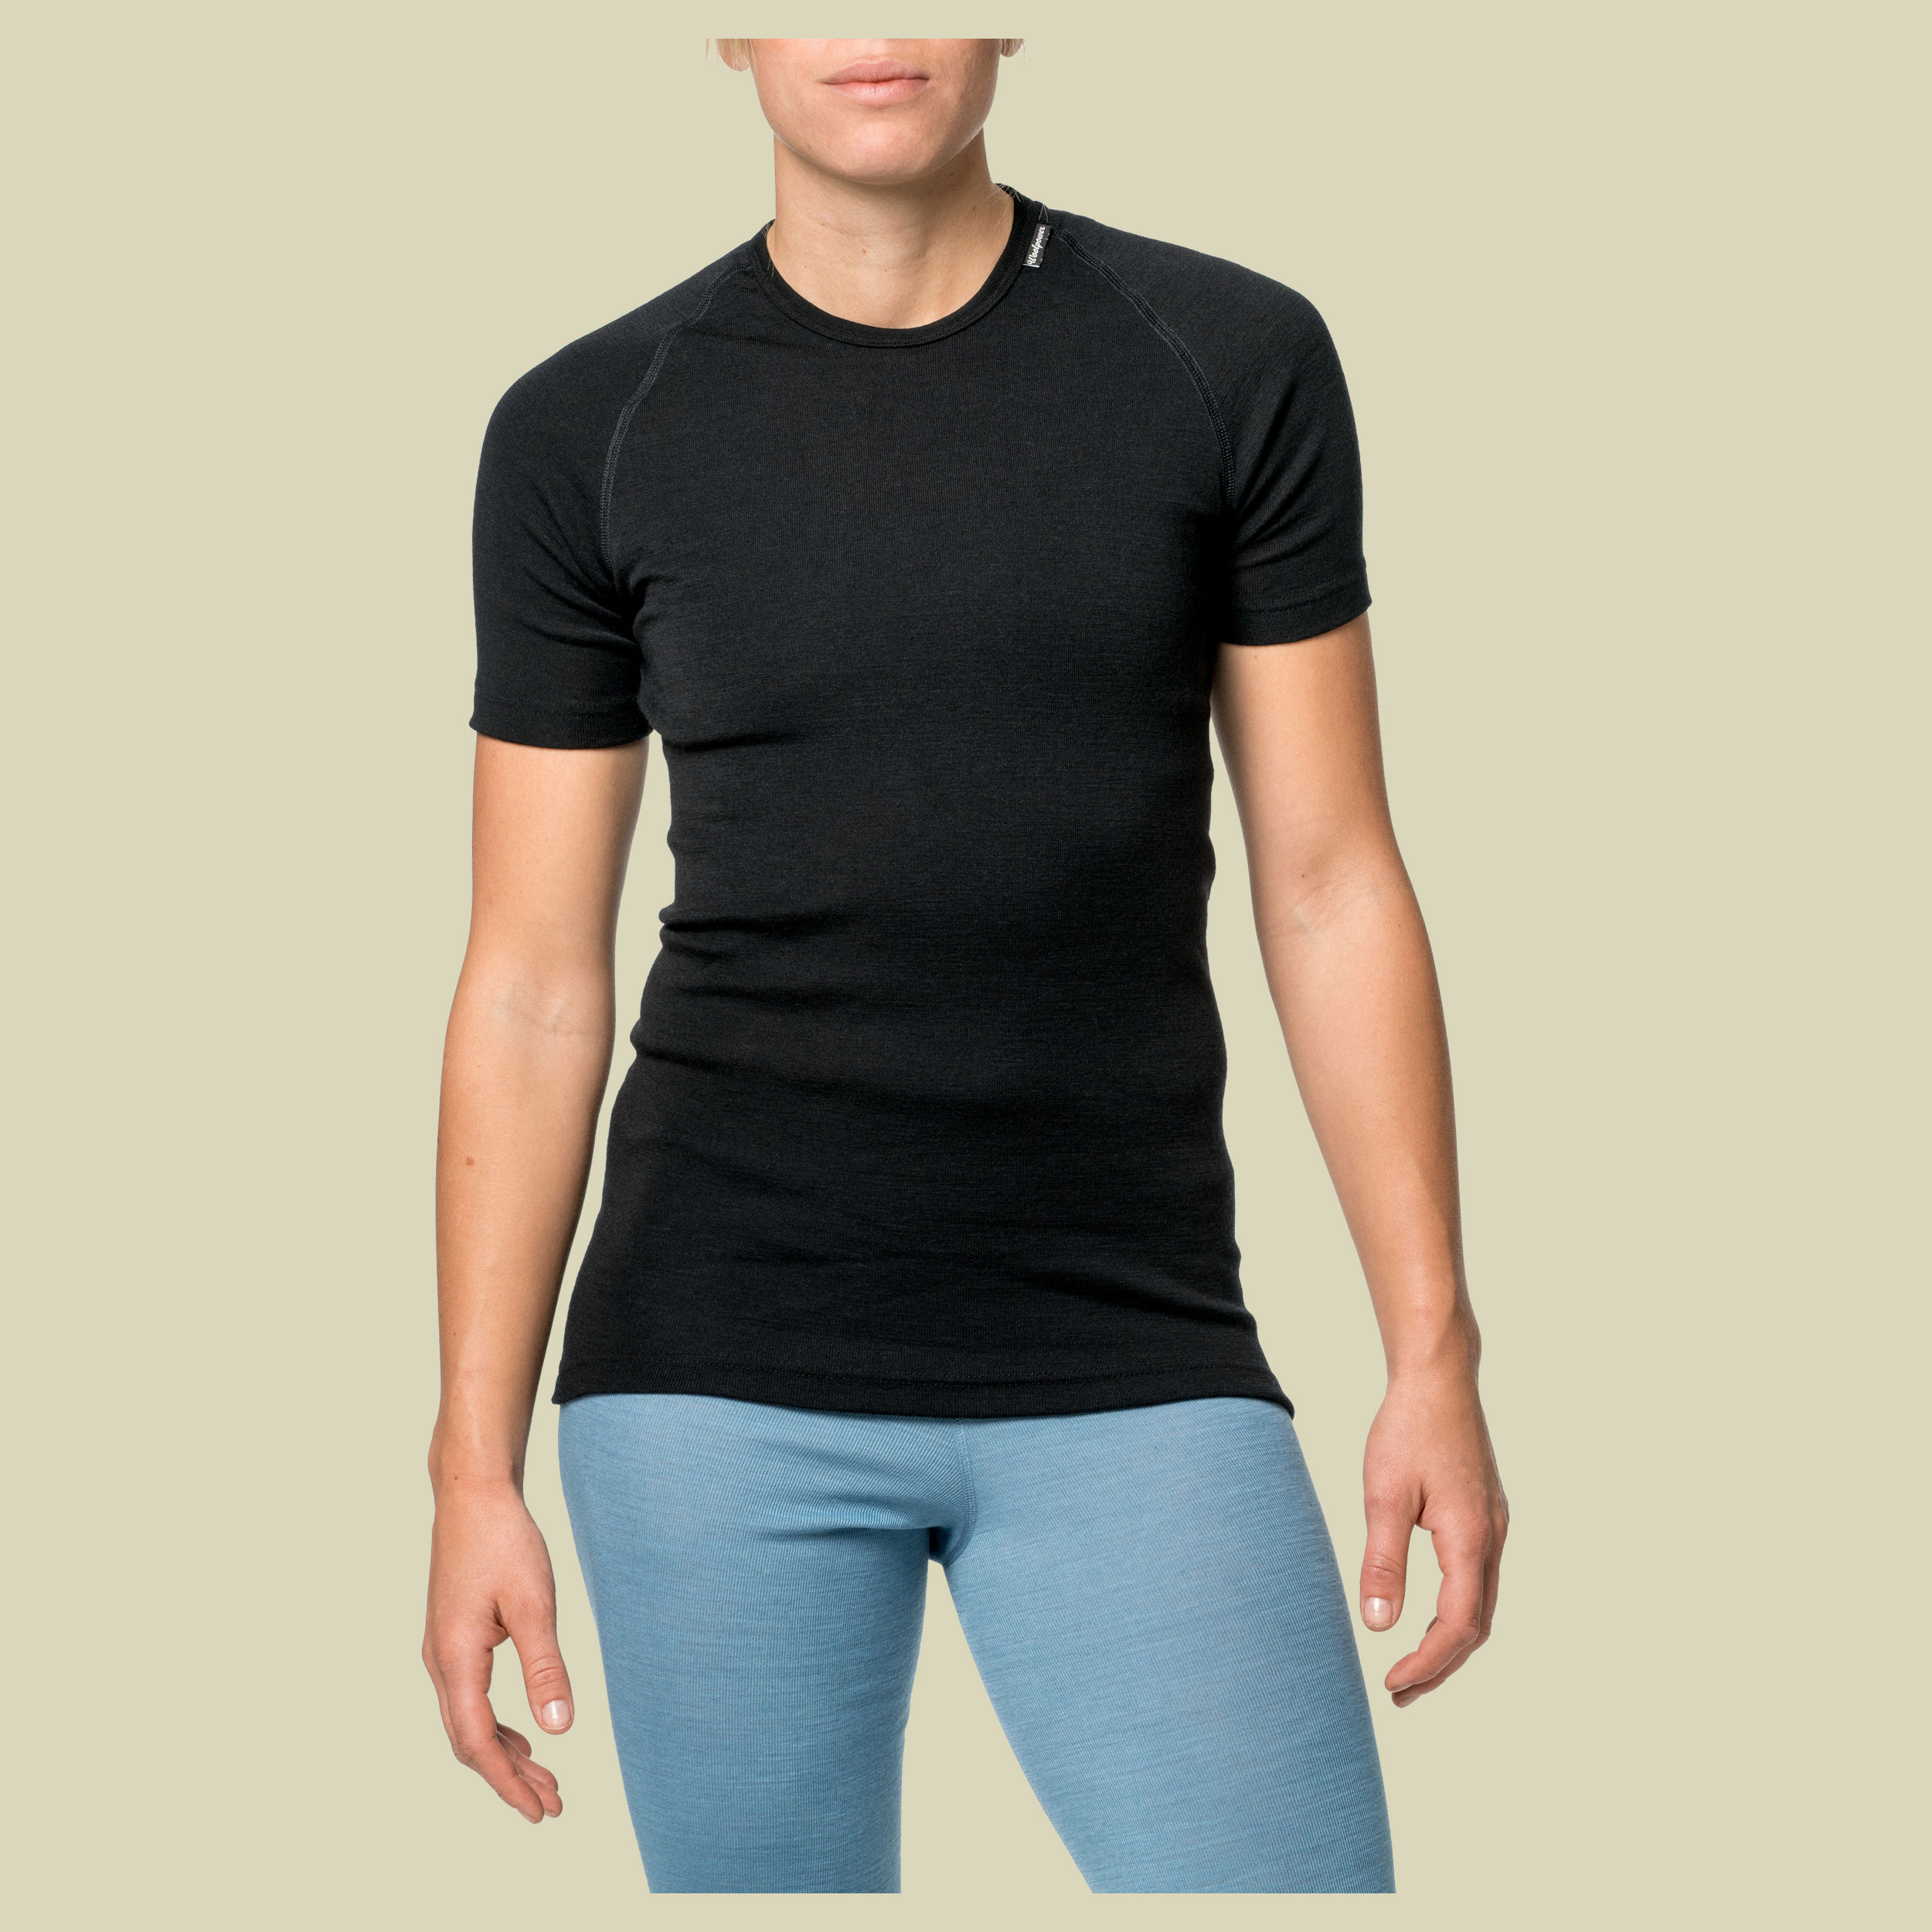 Lite T-Shirt XL schwarz - Farbe black